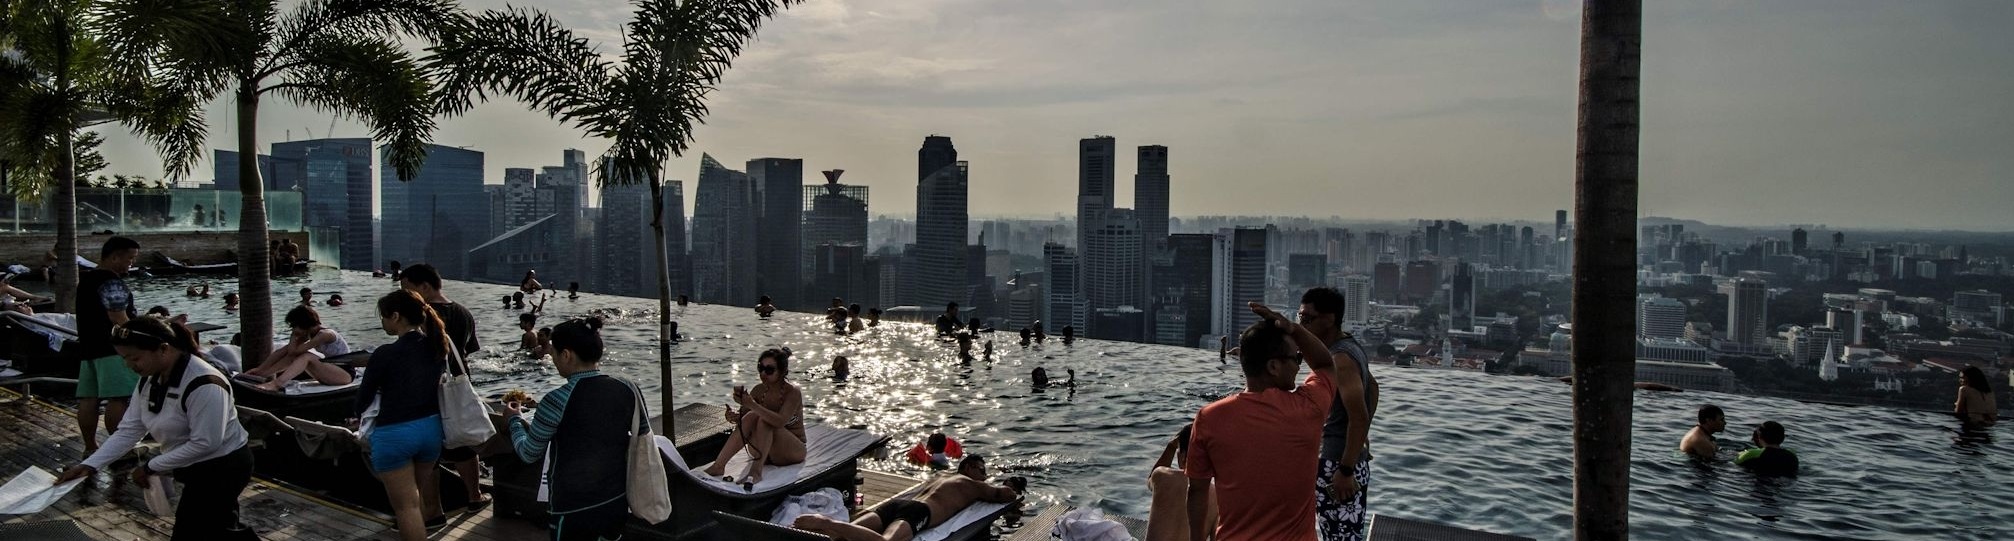 Marina Bay Sands Infinity Pool Singapur Mogroach